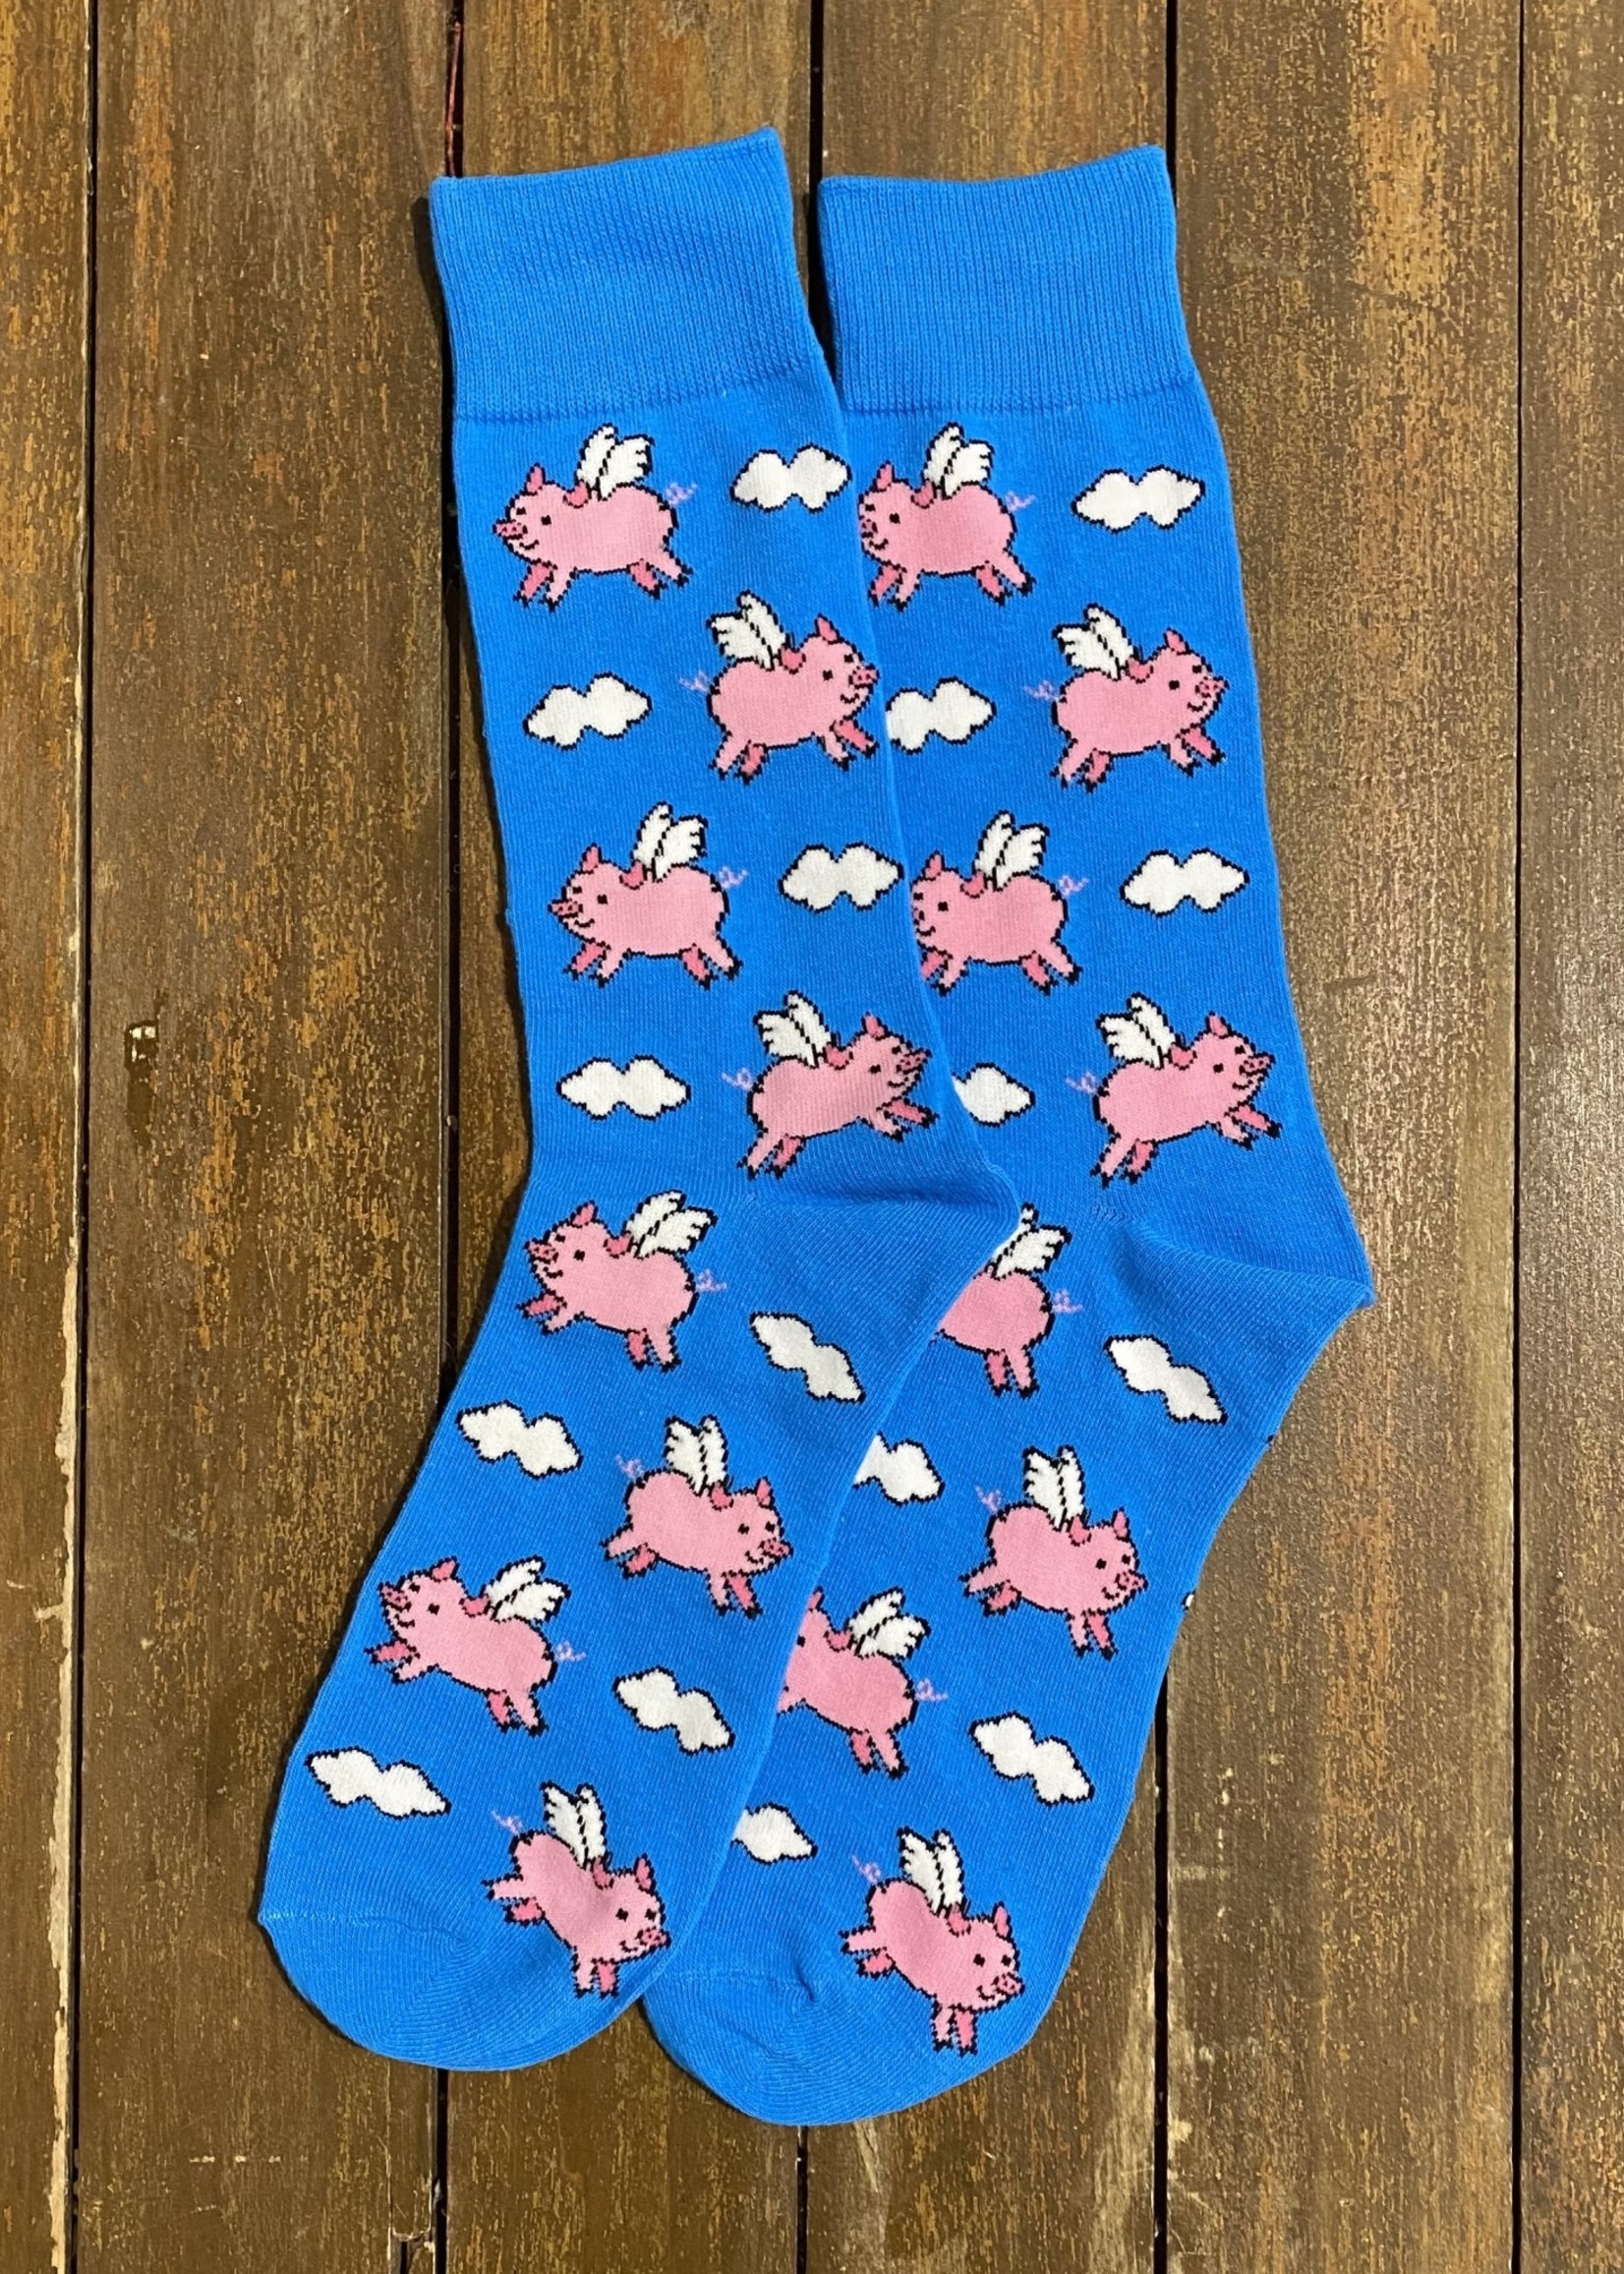 Selini New York Parquet Animal Socks